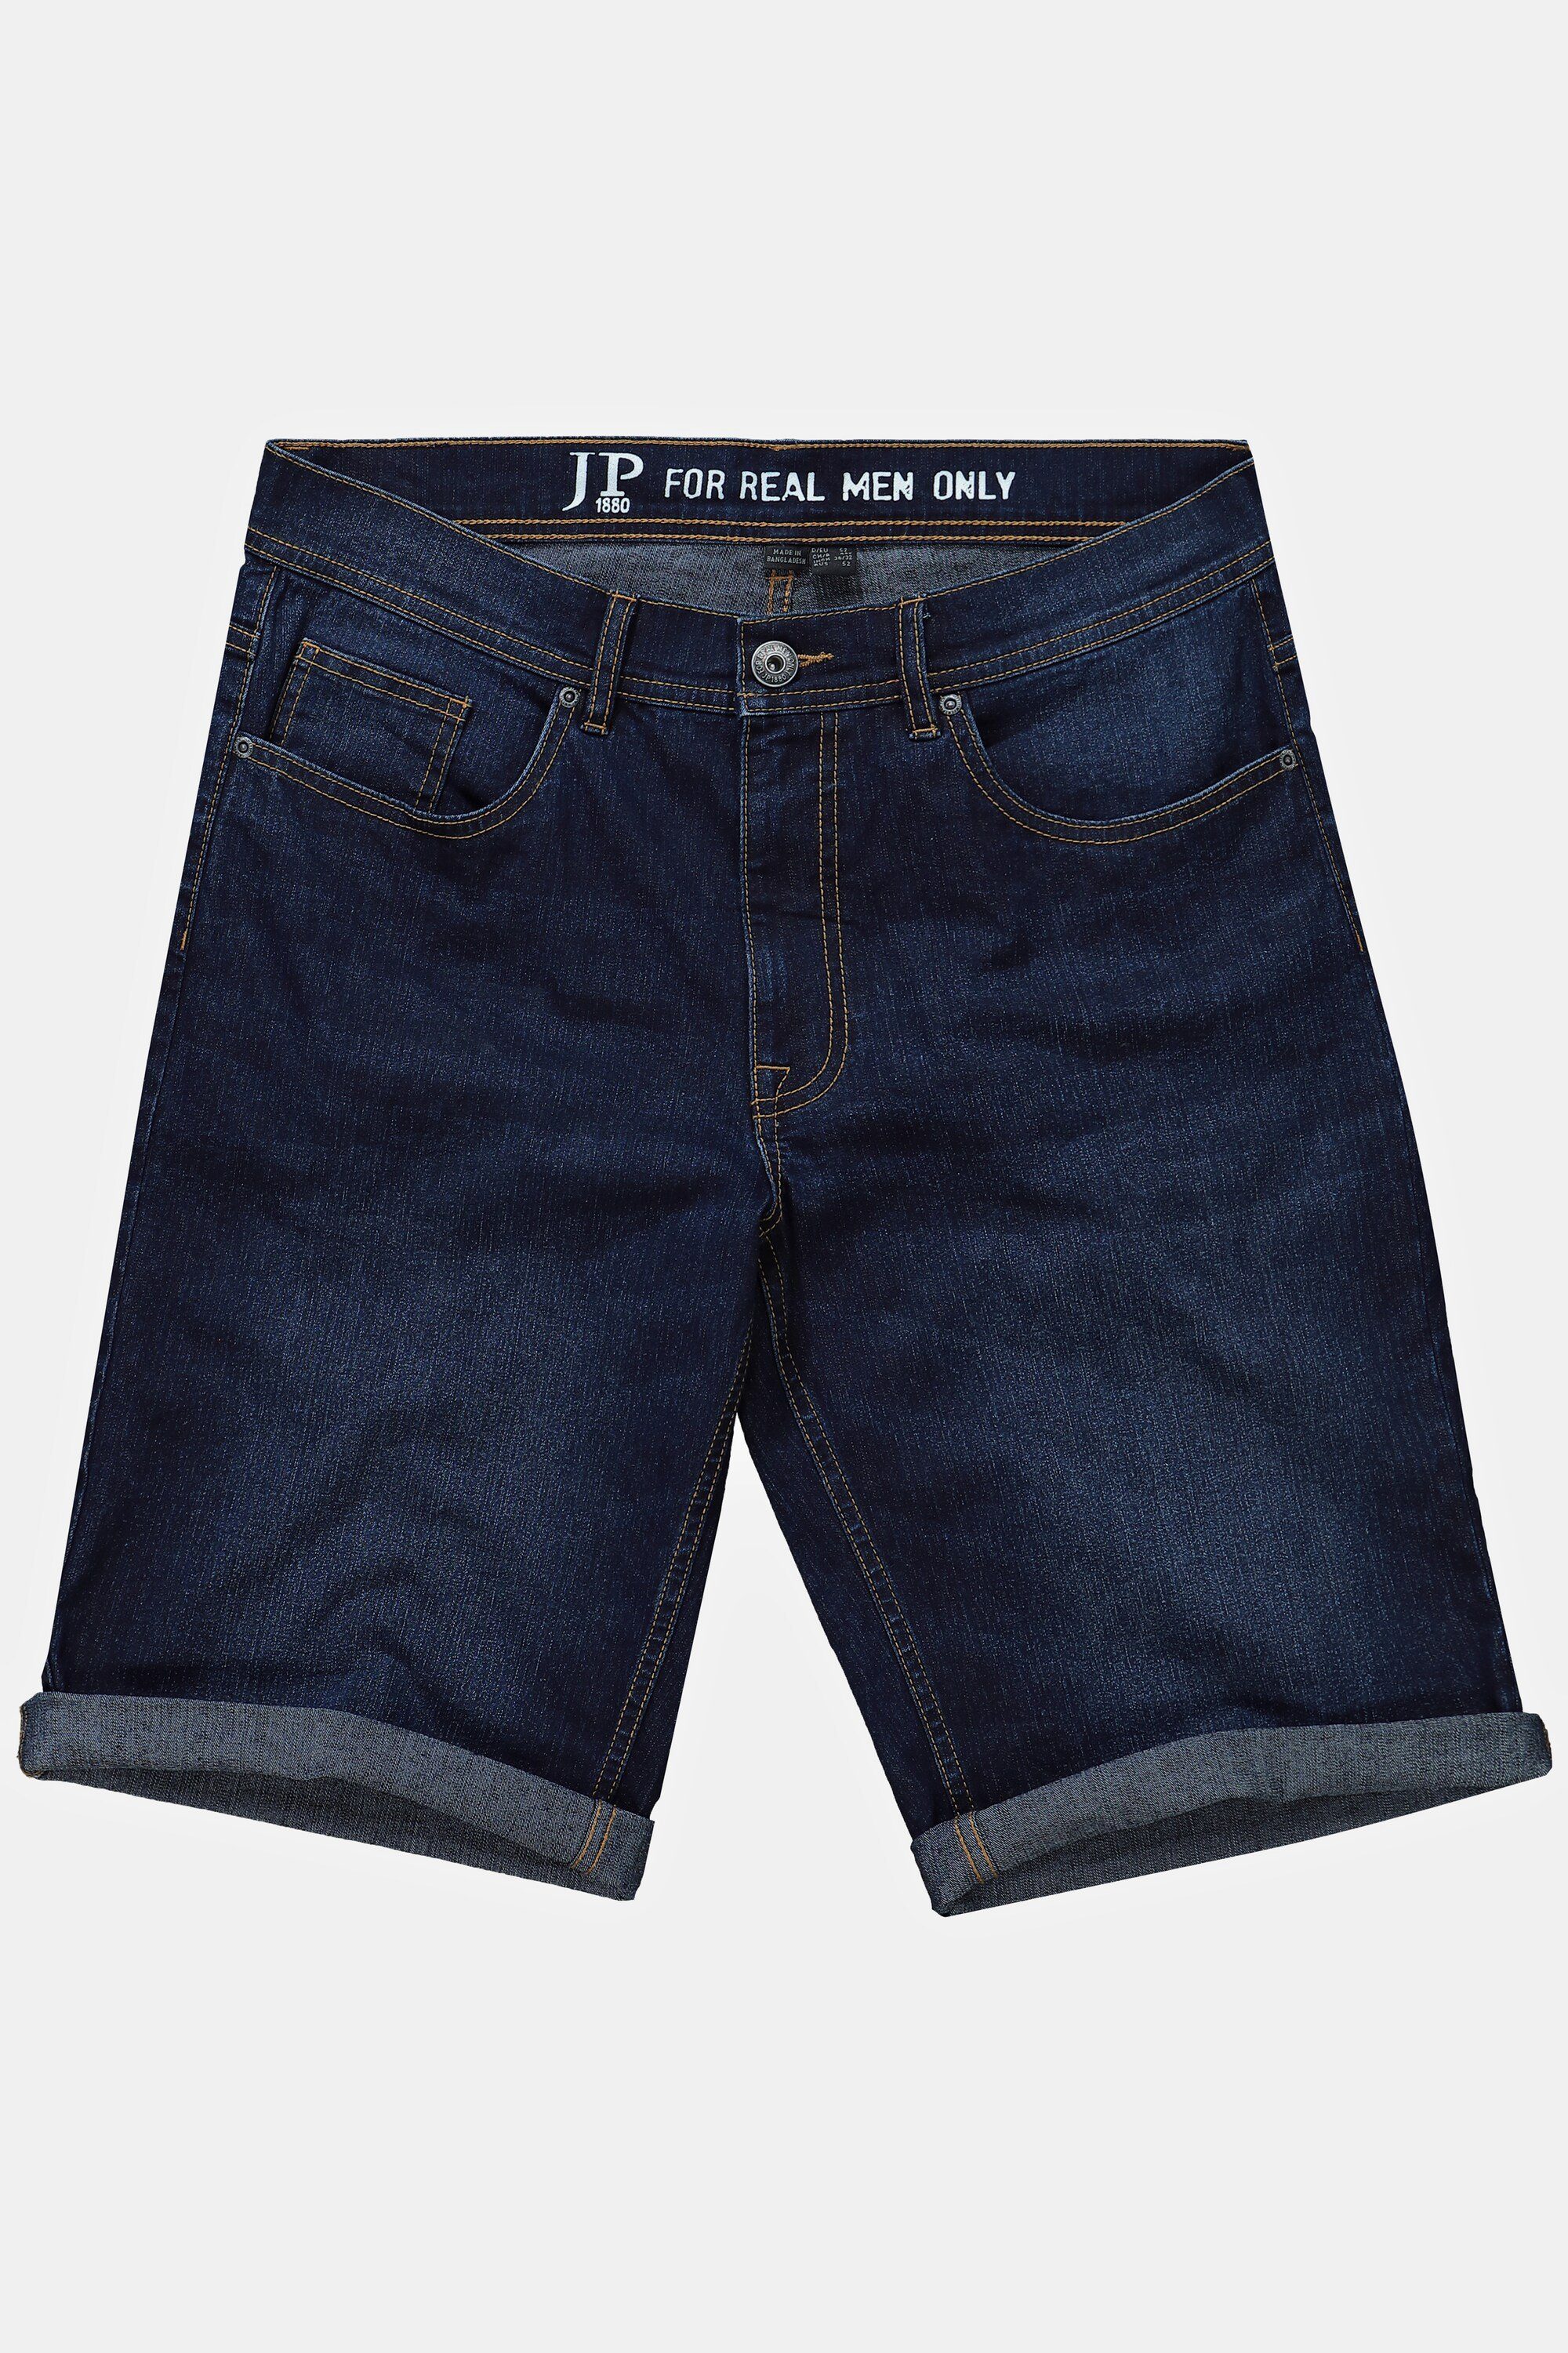 Jeansbermudas dark Regular Fit blue Bermuda Denim JP1880 5-Pocket denim Stretch